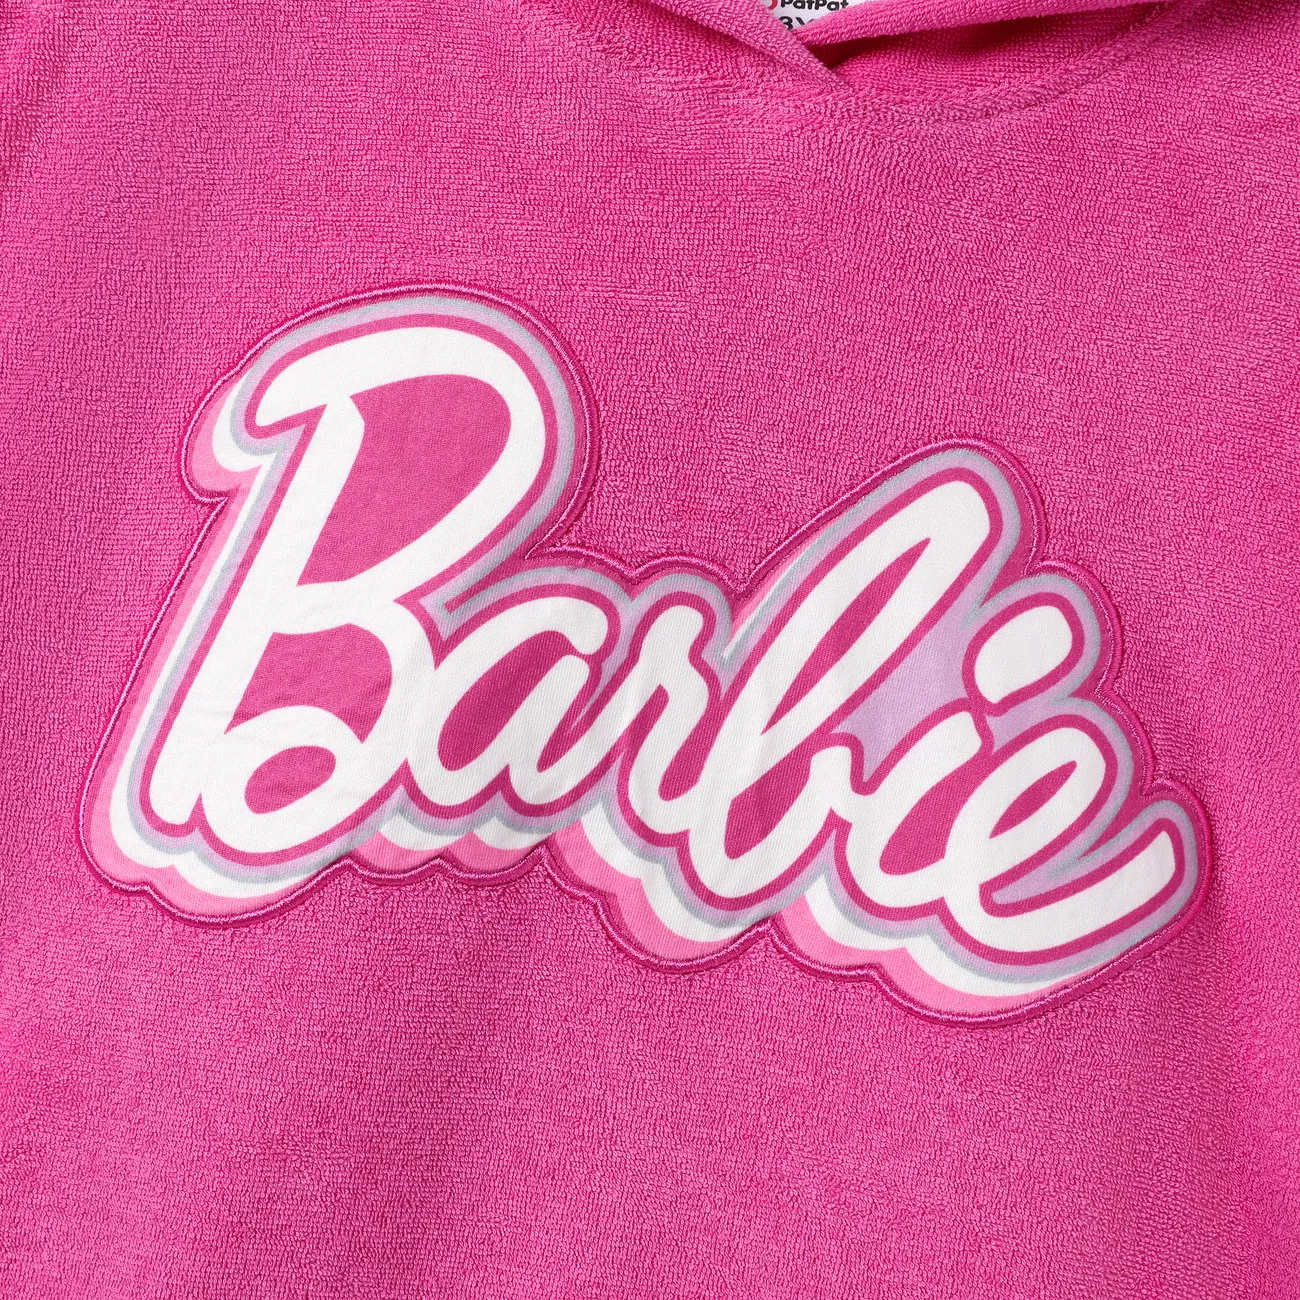 Barbie Mädchen Mit Kapuze Kindlich Badebekleidung roseo big image 1